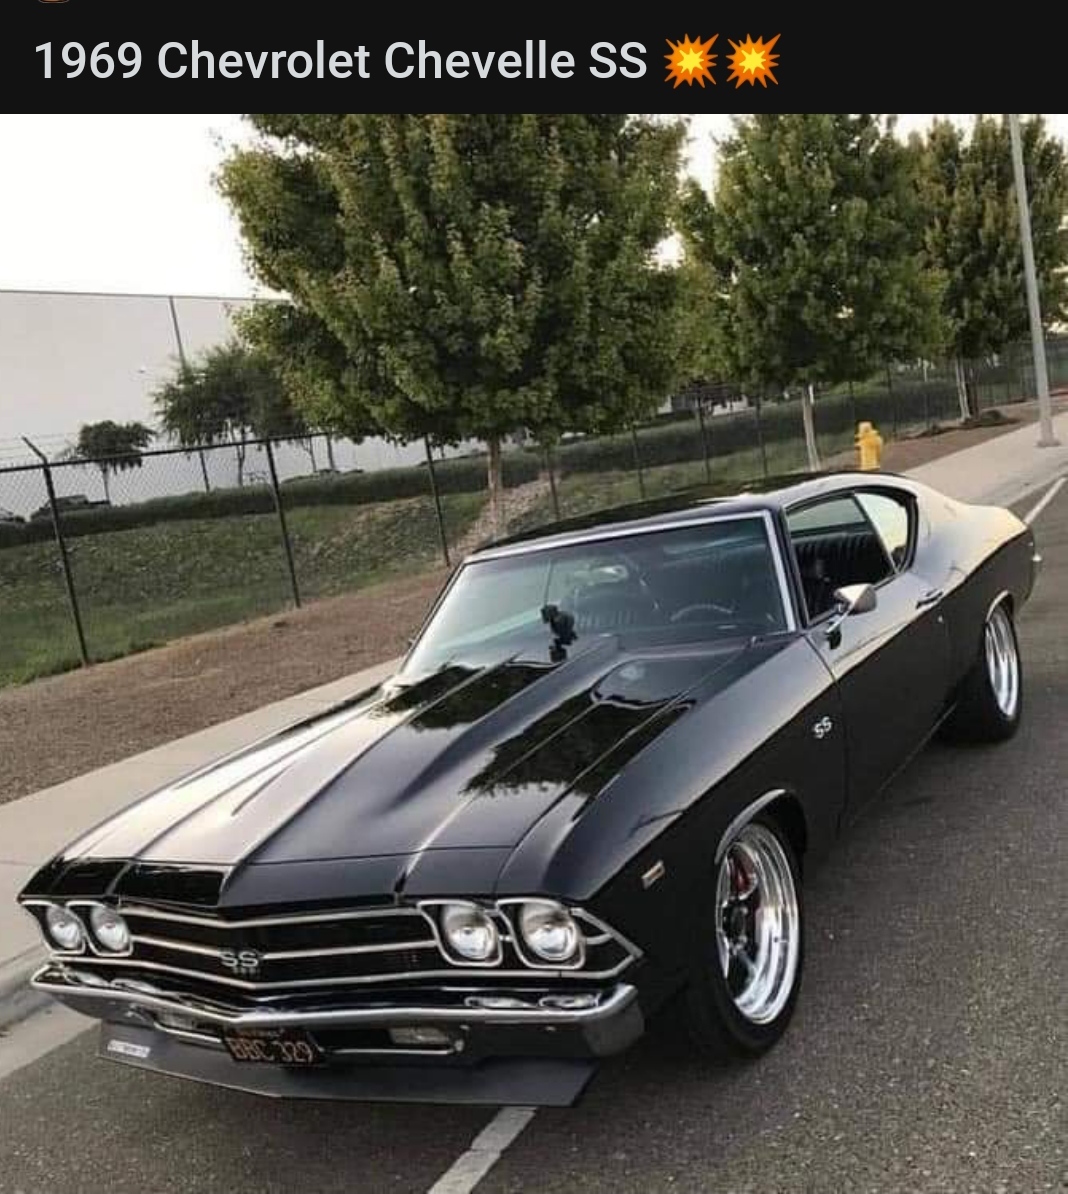 Шевроле шеви. Chevrolet Chevelle 1969. Chevy Chevelle SS 1969. Шевроле Шевель 1969. Chevrolet Chevelle SS.